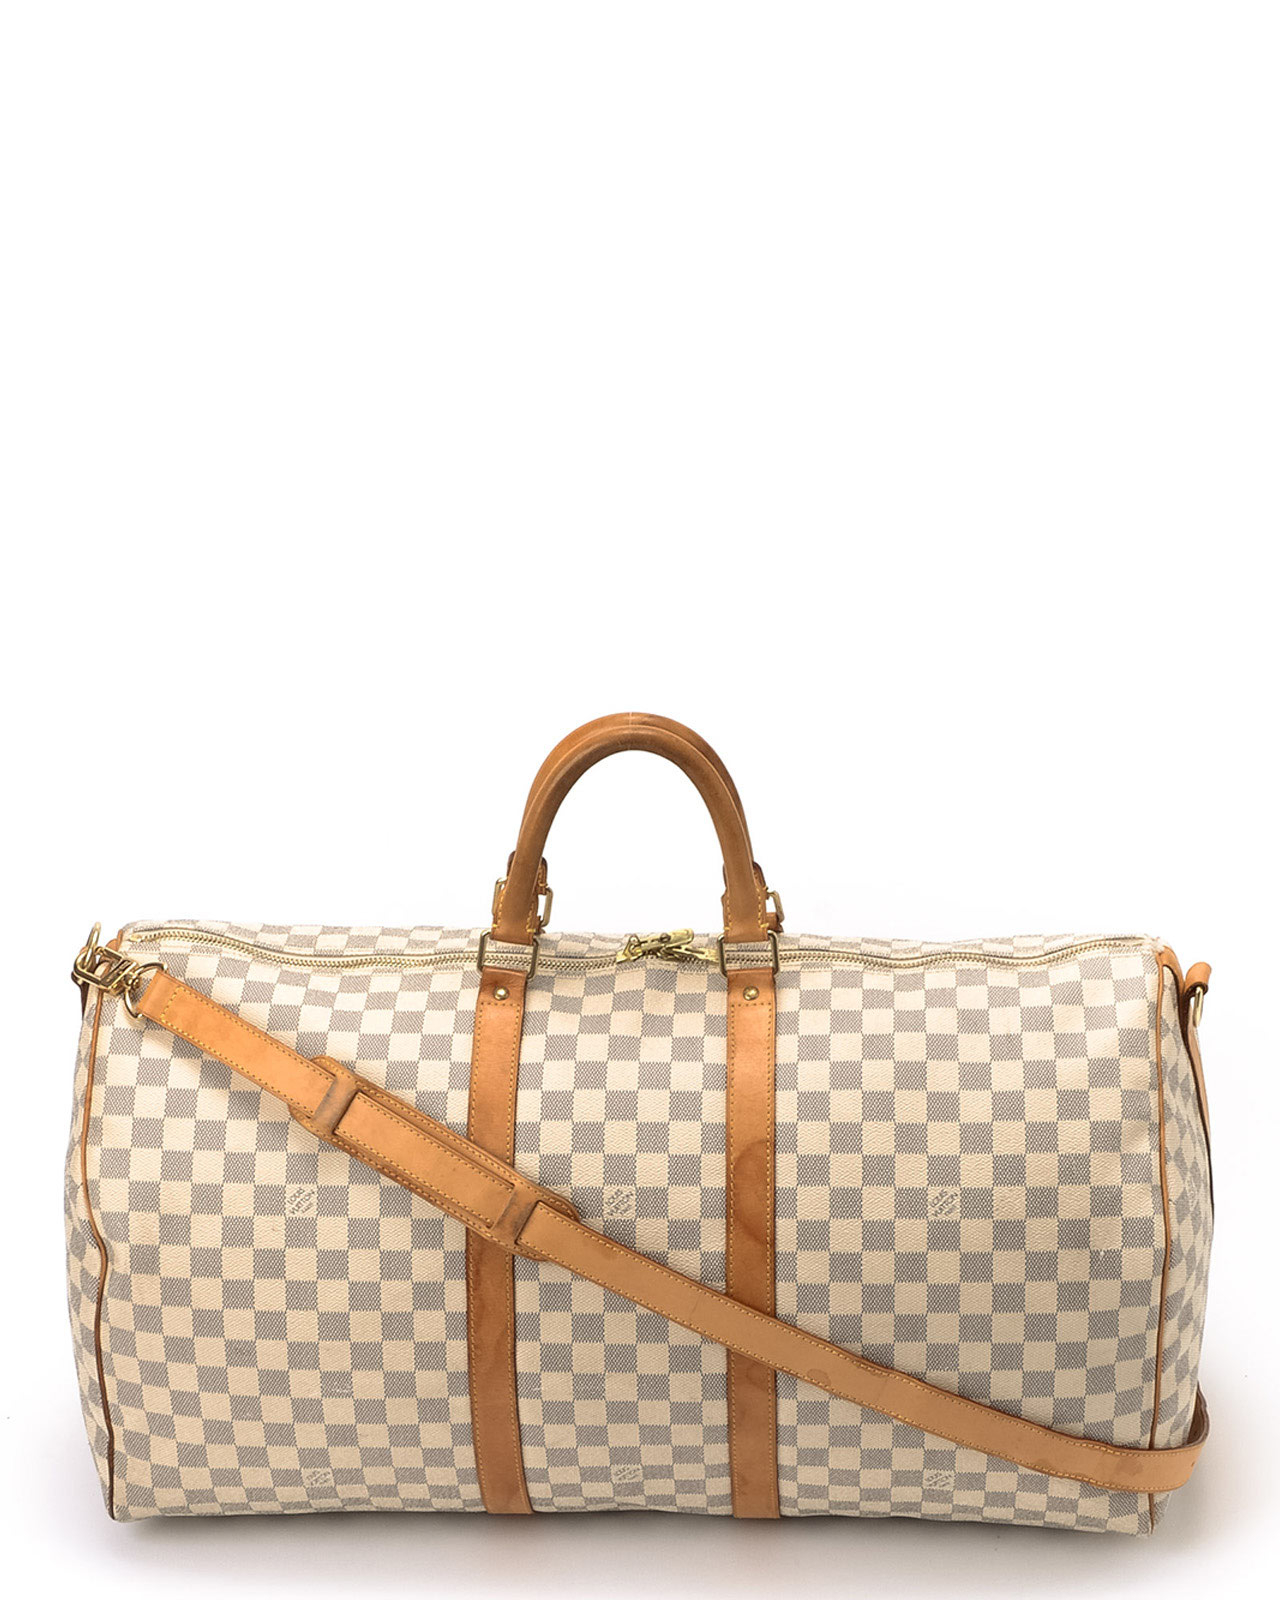 Lyst - Louis Vuitton Damier Azur Keepall 55 Bandou Travel Bag in White